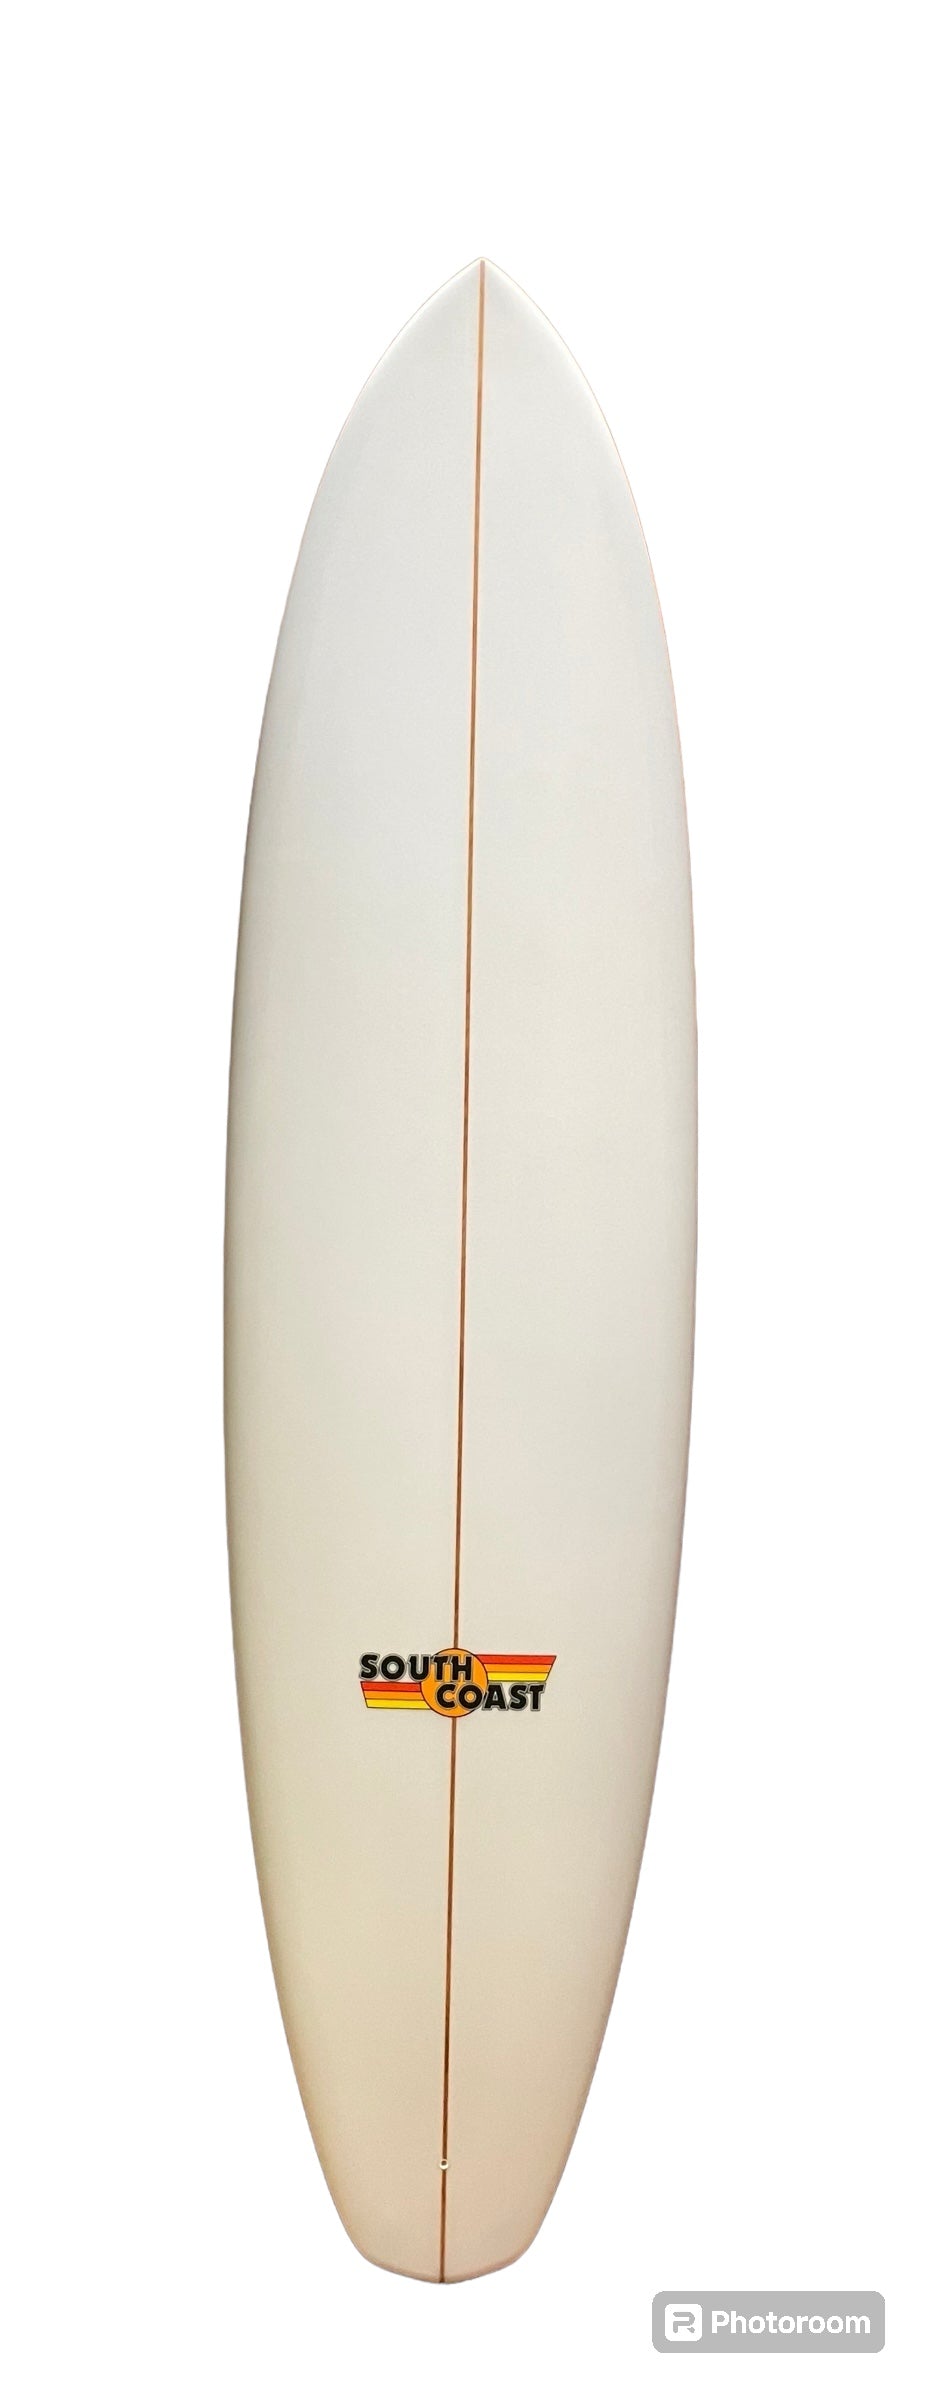 South Coast Big Tony 7'6" Surfboard